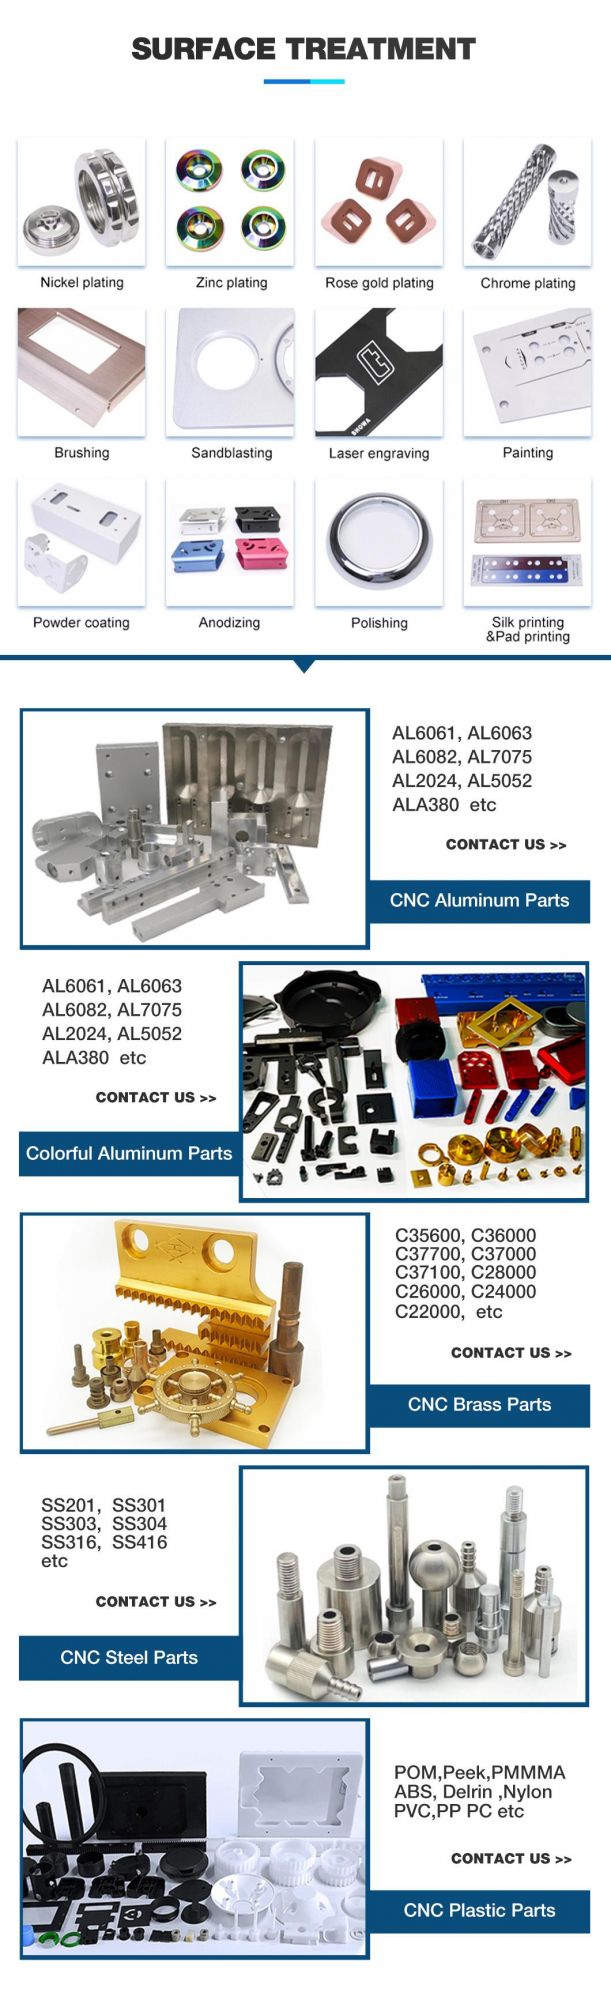 ODM Brass Parts CNC Machining Service CNC Milling Components